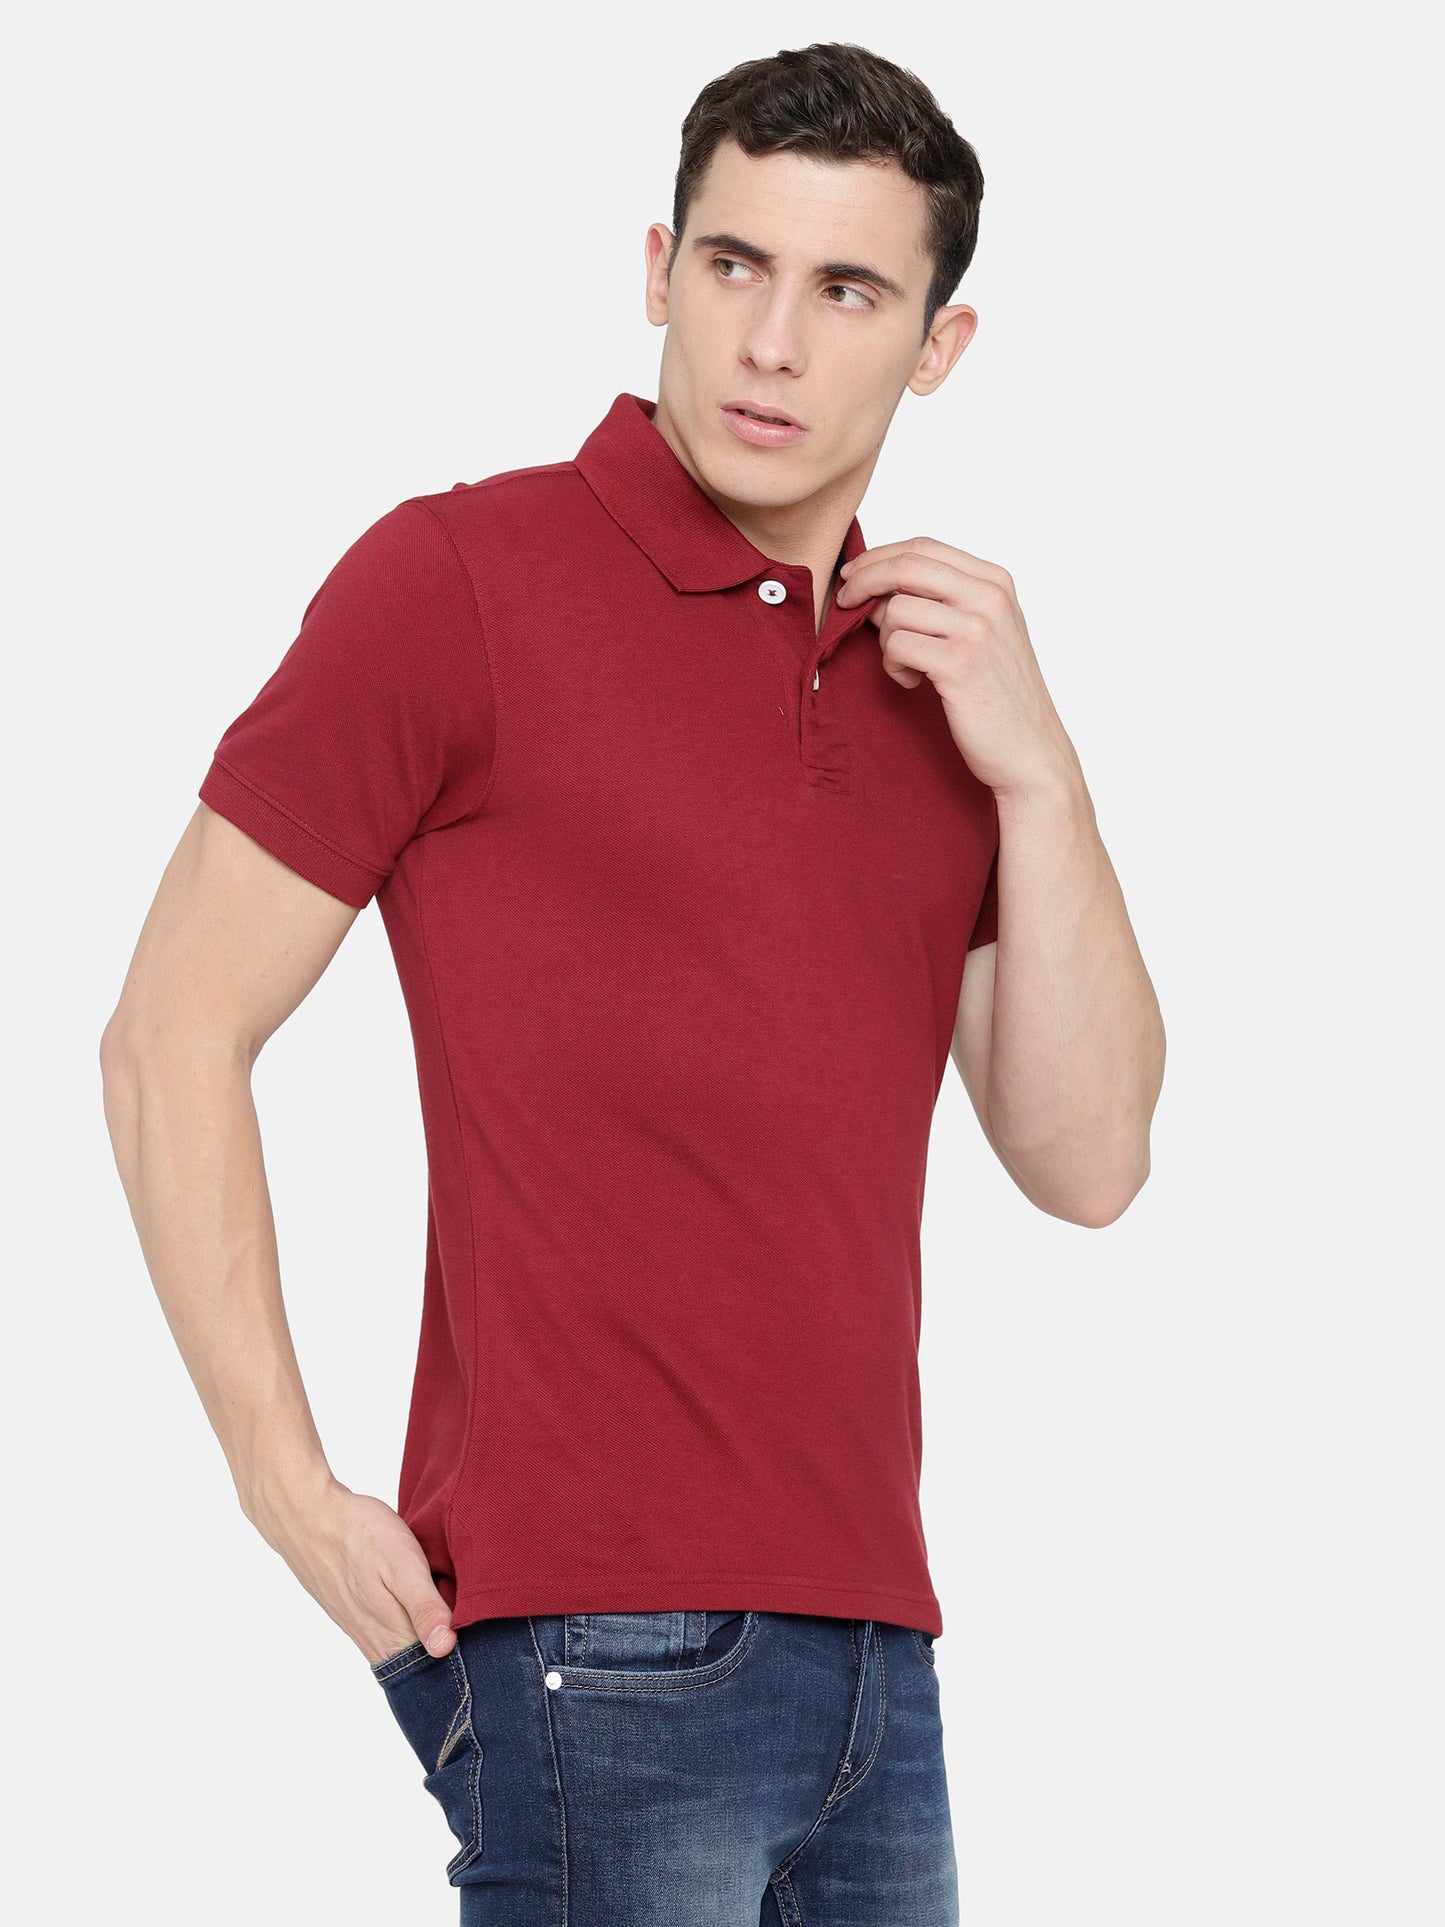 Maroon colour Polo T-Shirt pique